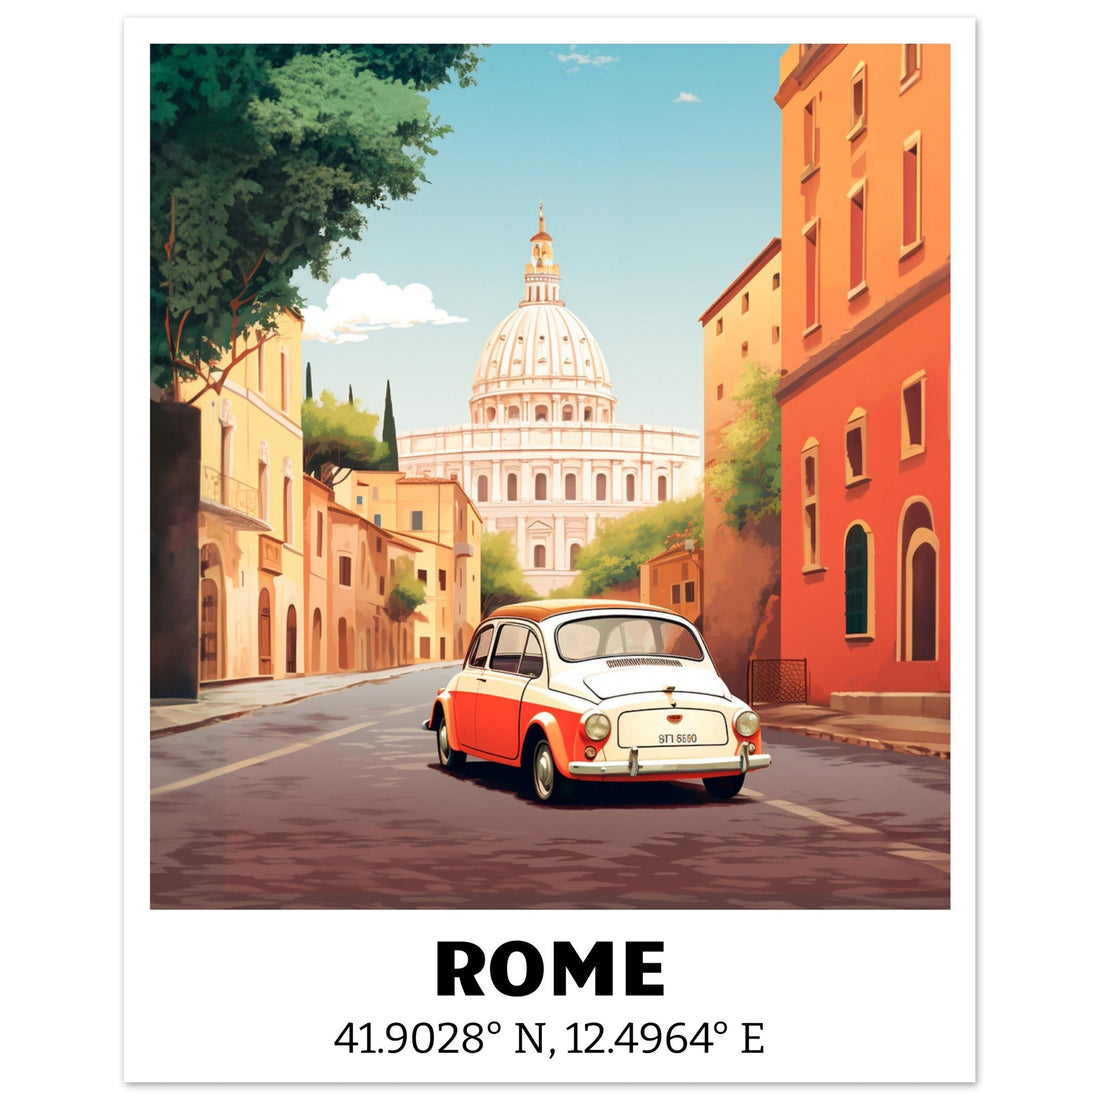 Italy - Rome Coordinates, italy travel poster, retro Travel print, rome travel poster, #illieeart #